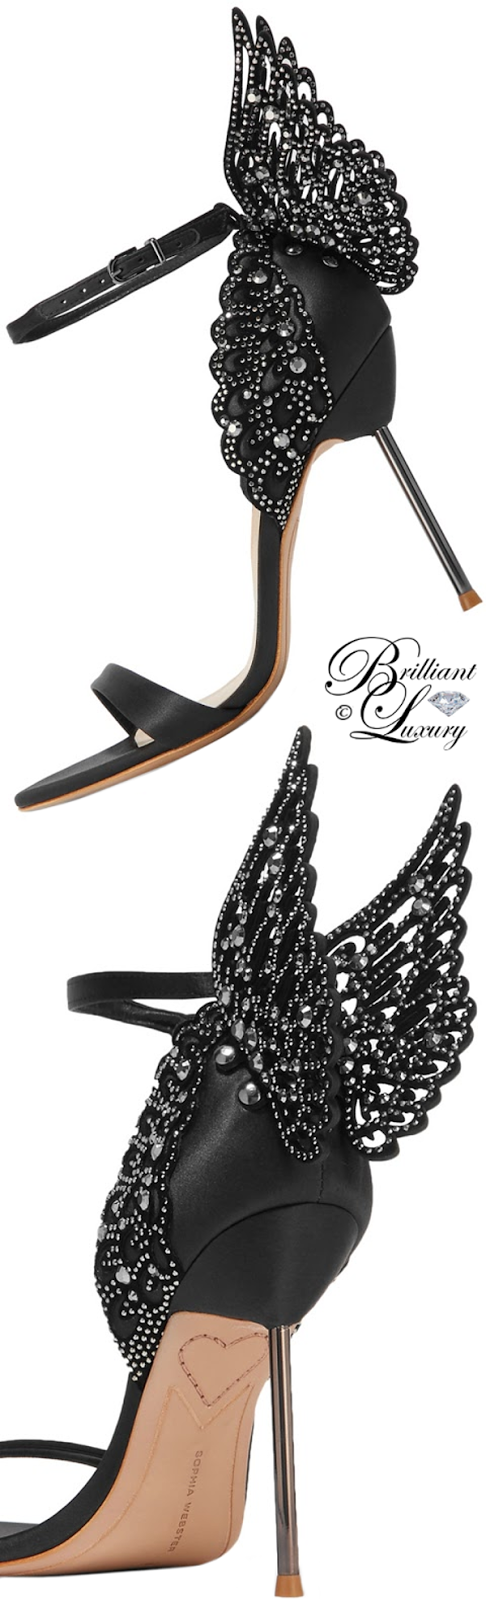 Brilliant Luxury ♦ Sophia Webster Evangeline Sandal